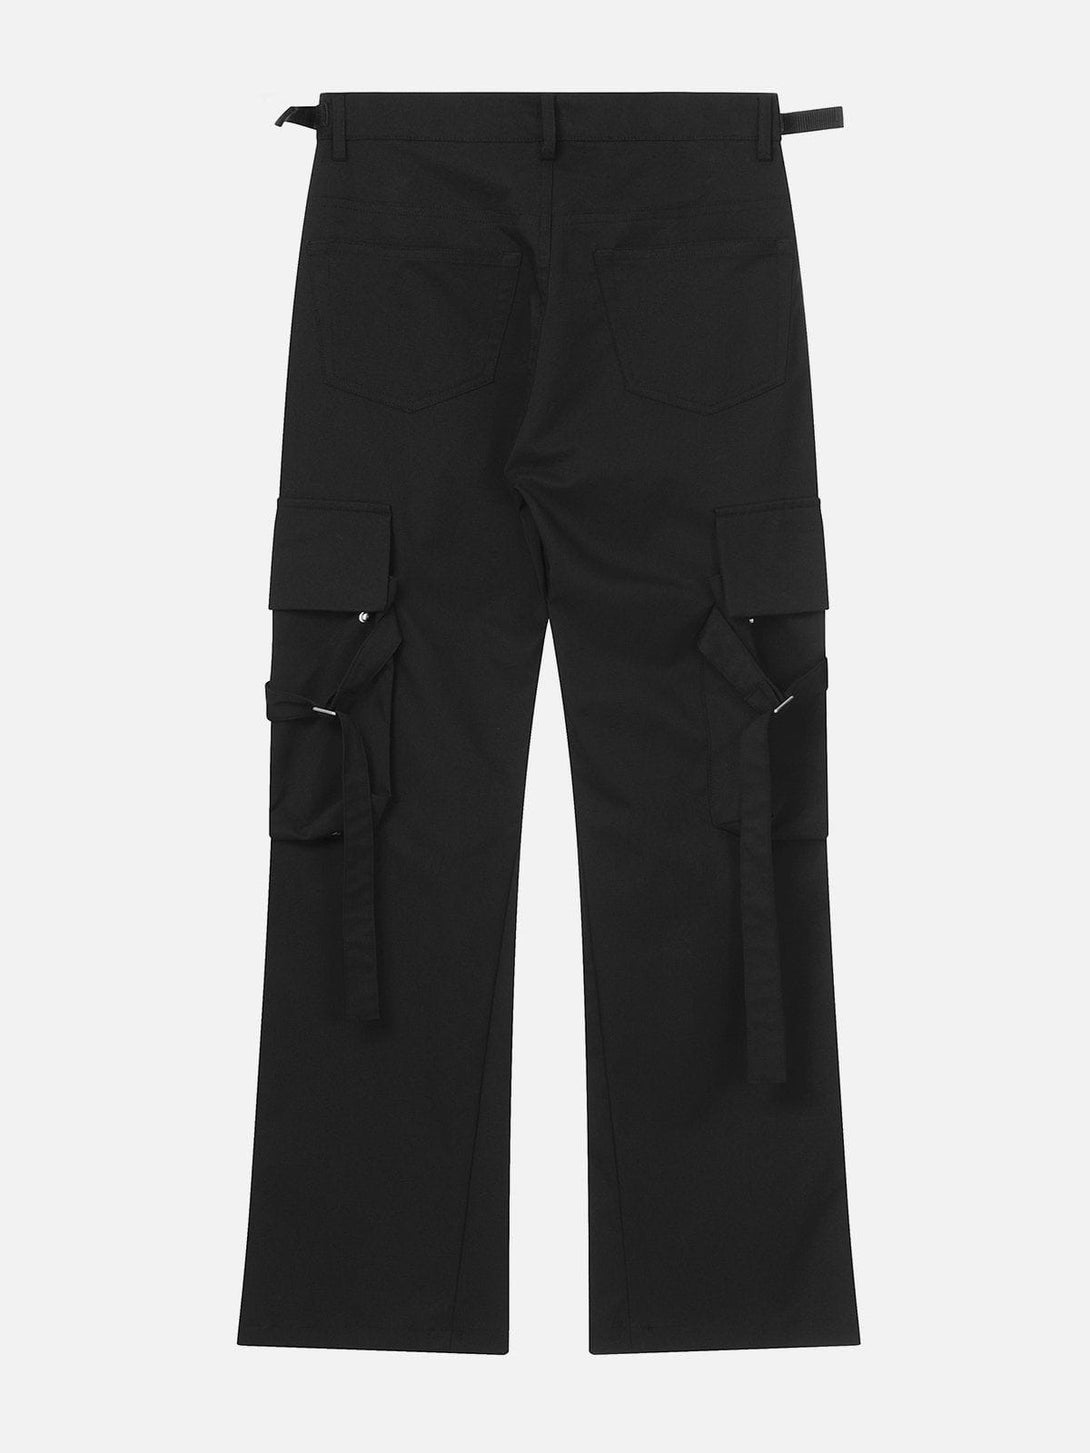 Levefly - Waist Adjustment Design Jeans - Streetwear Fashion - levefly.com